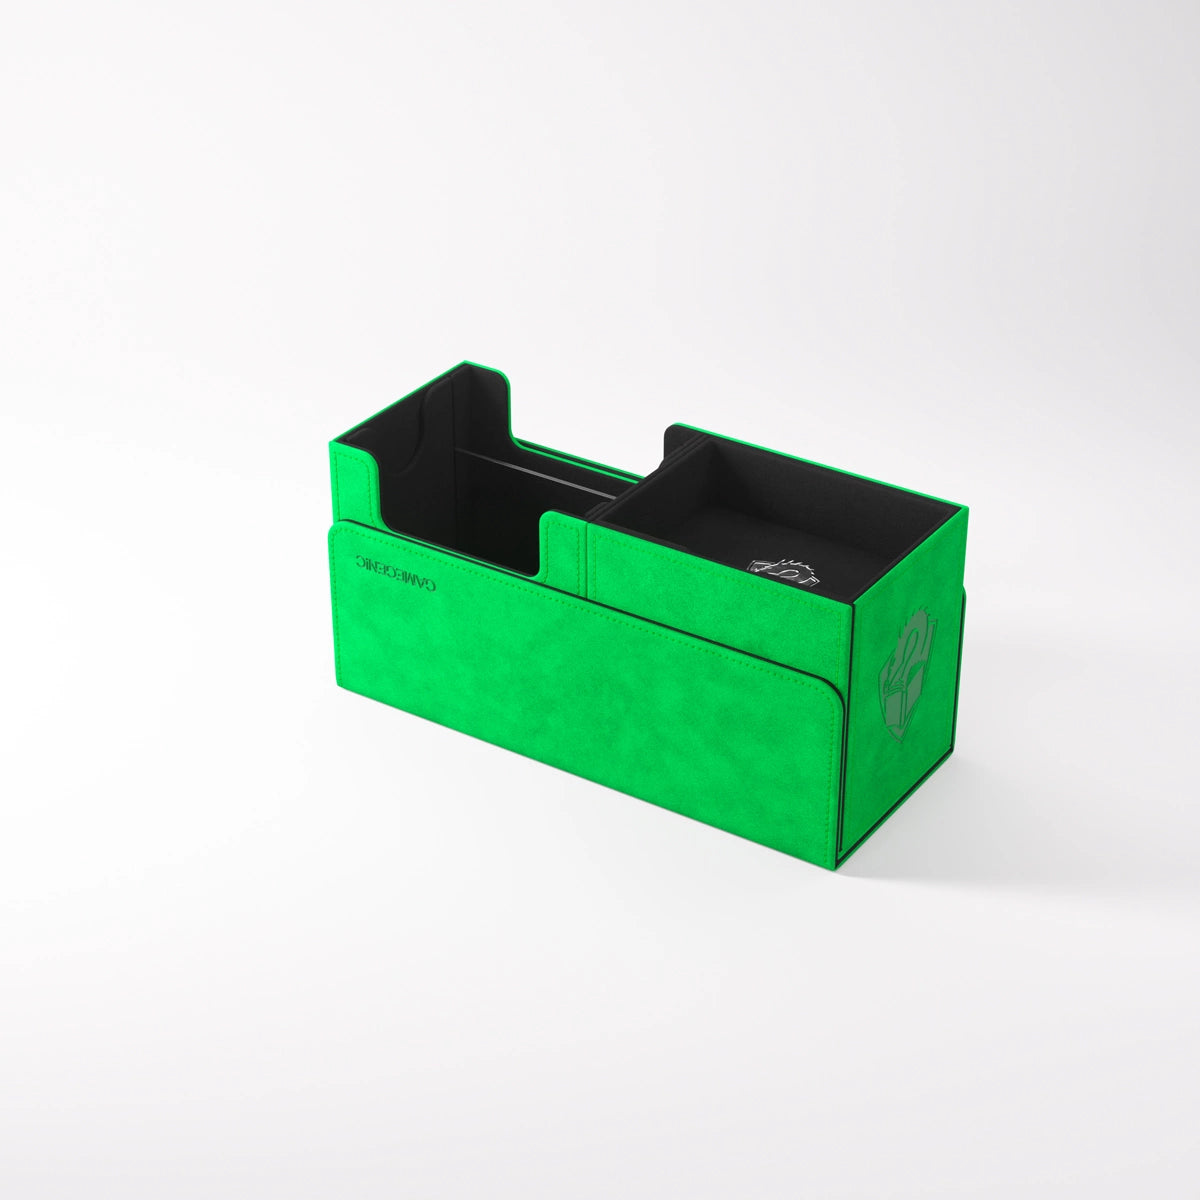 Deck Box: The Academic 133+ XL Green/Black Tolarian Edition